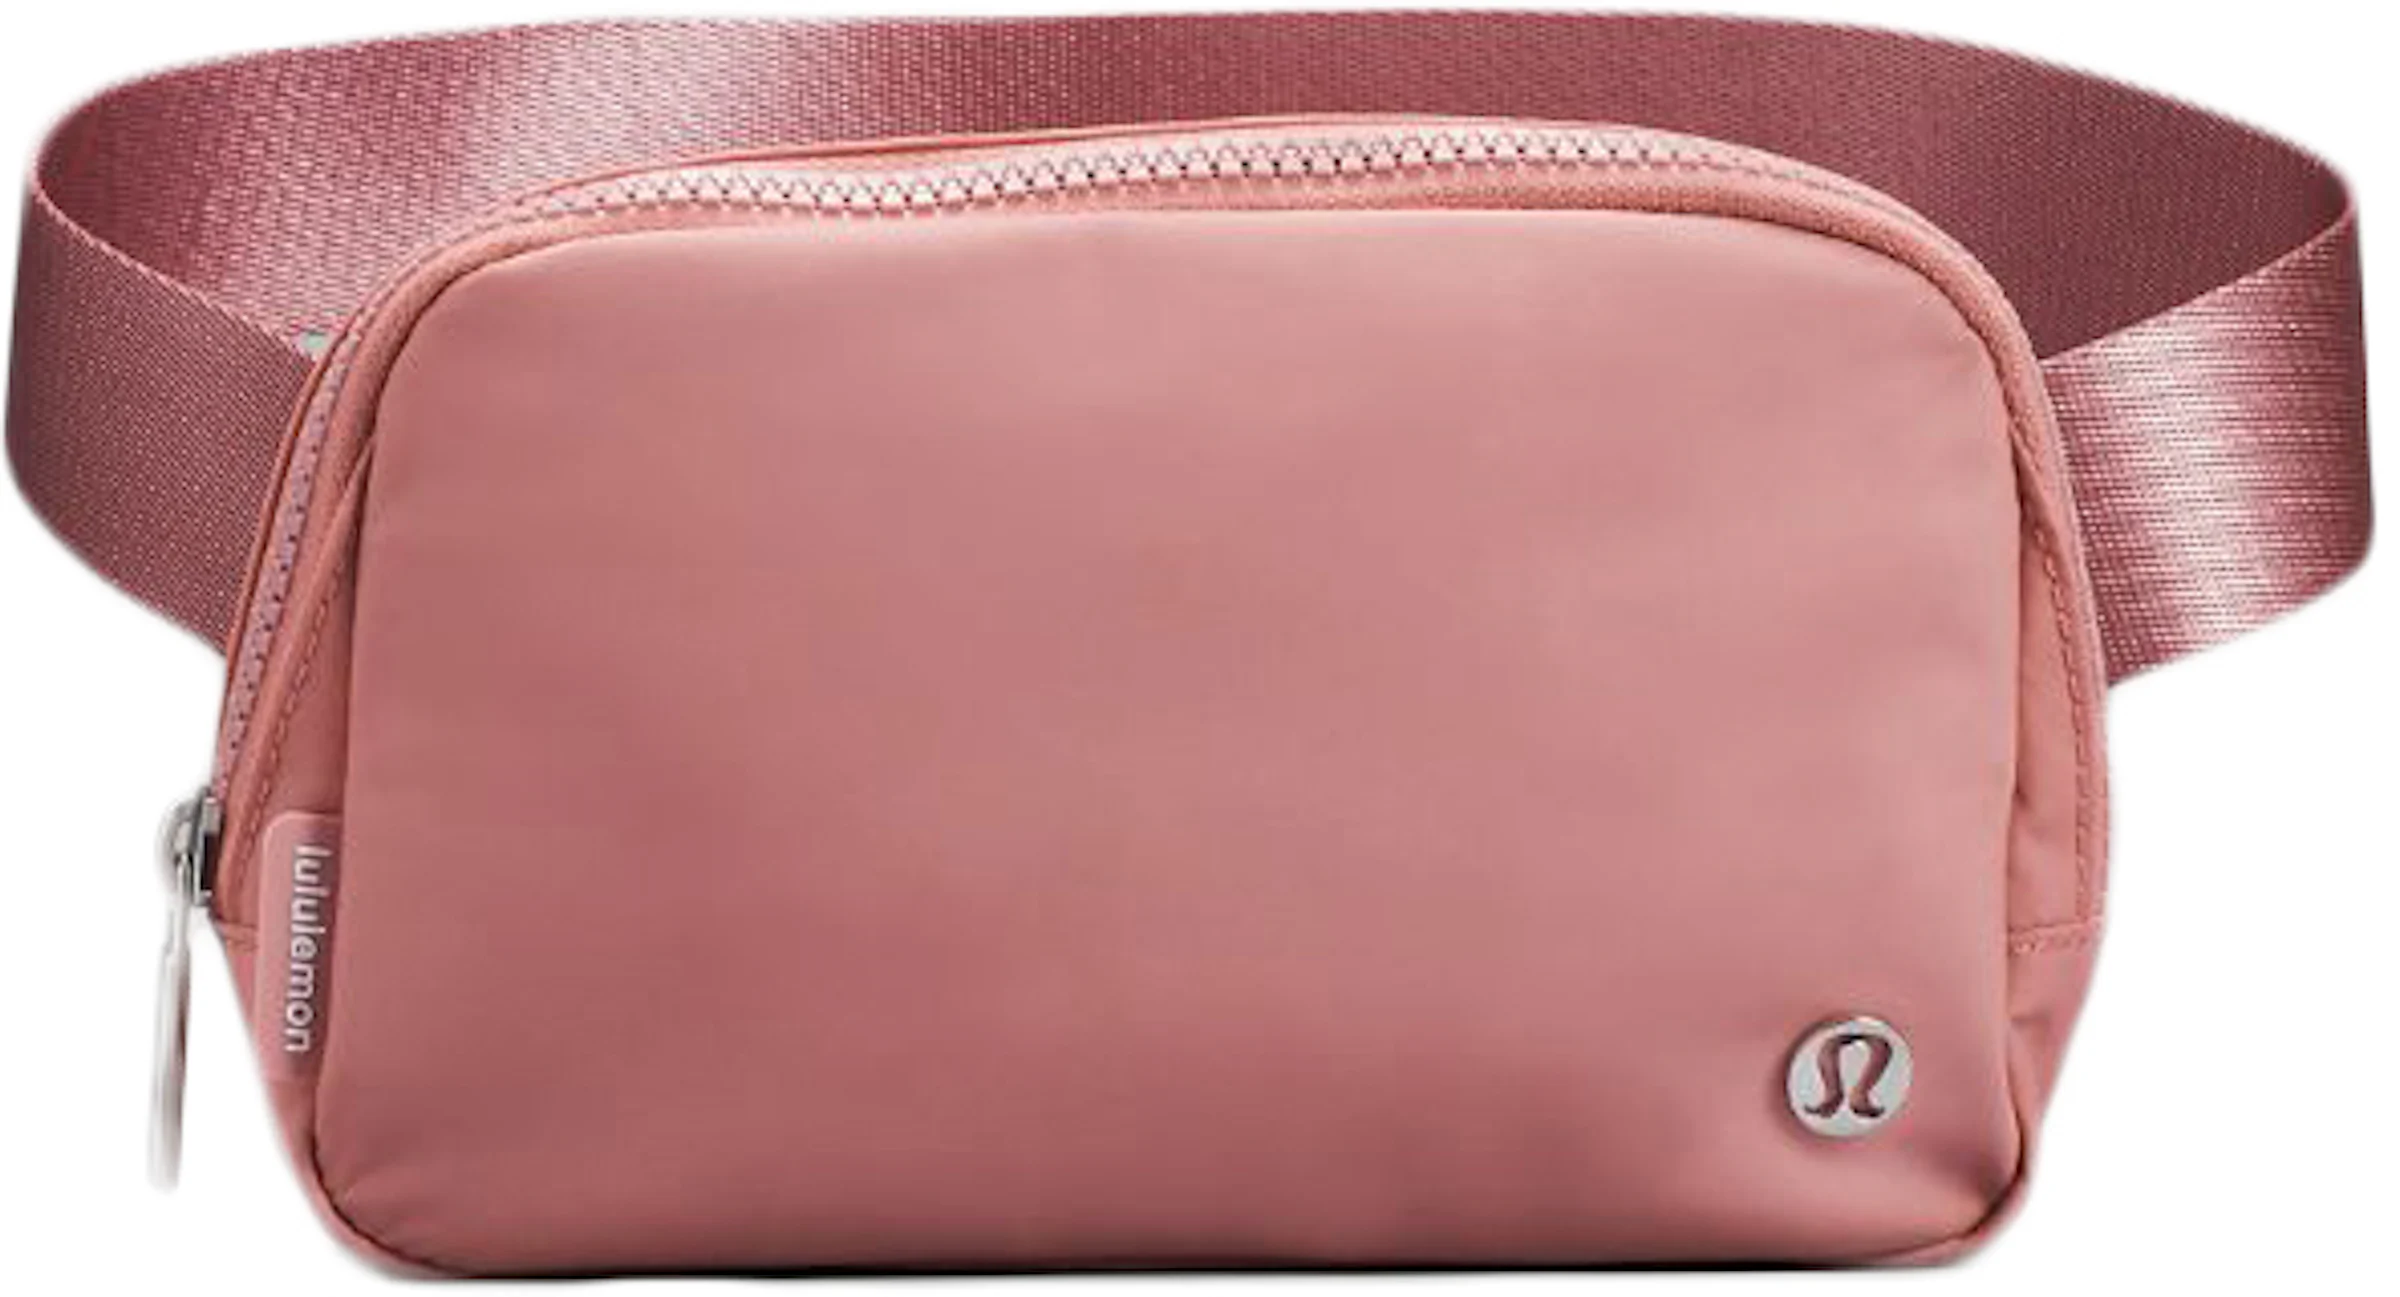 Lululemon Everywhere Belt Bag Crossbody Bag Pink Savannah in